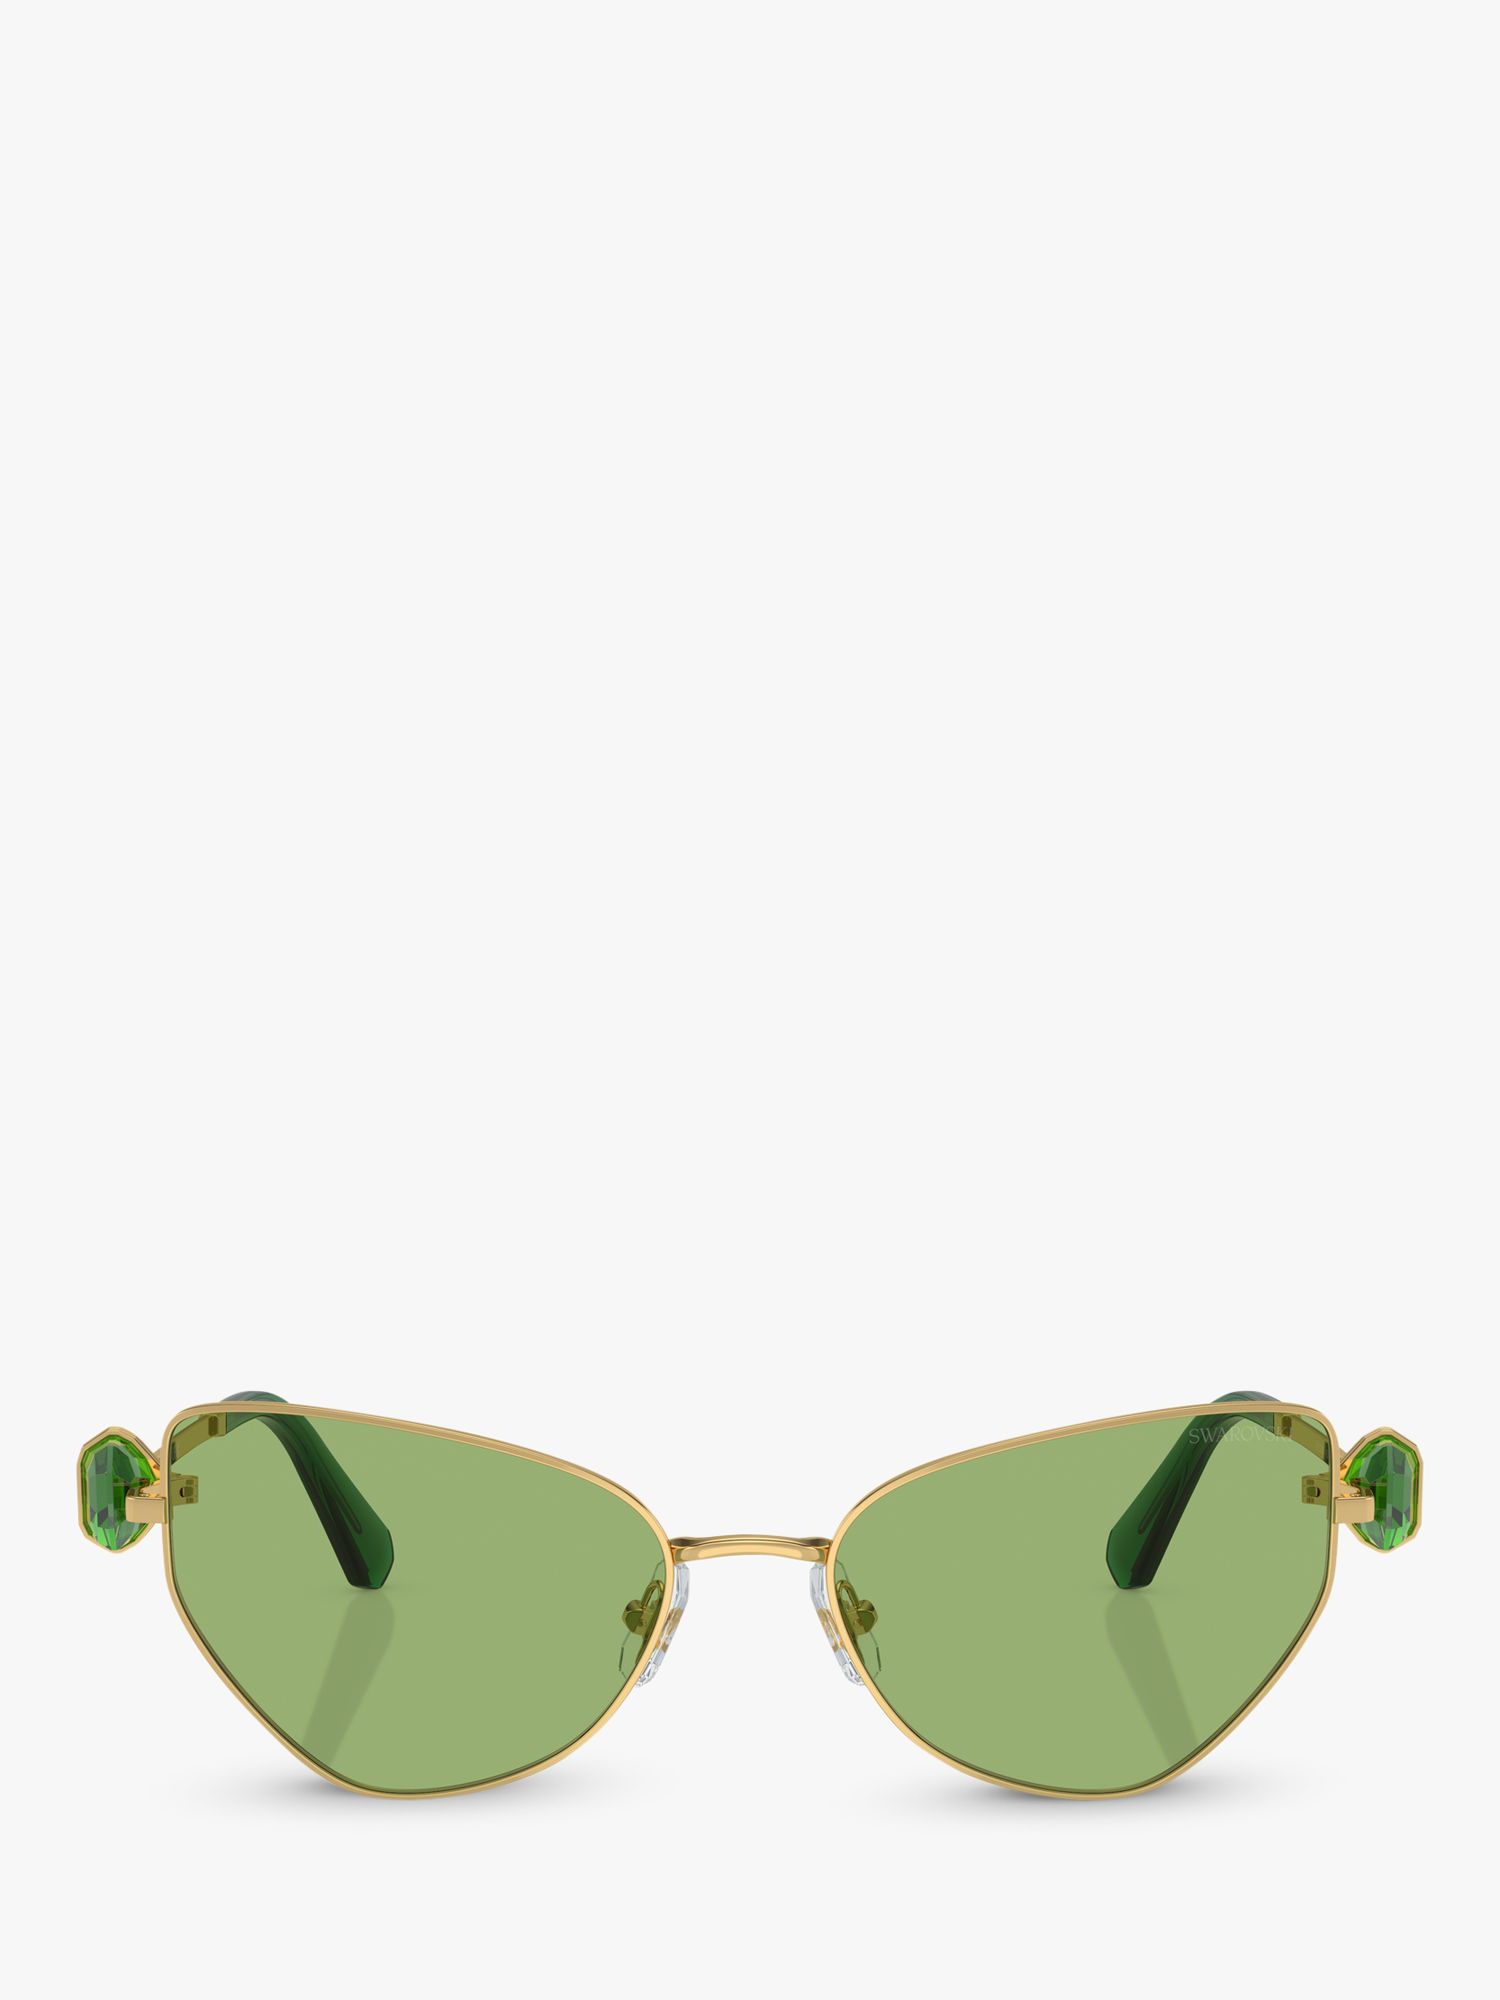 Buy Swarovski SK7003 Women's Irregular Butterfly Sunglasses, Gold/Green Online at johnlewis.com